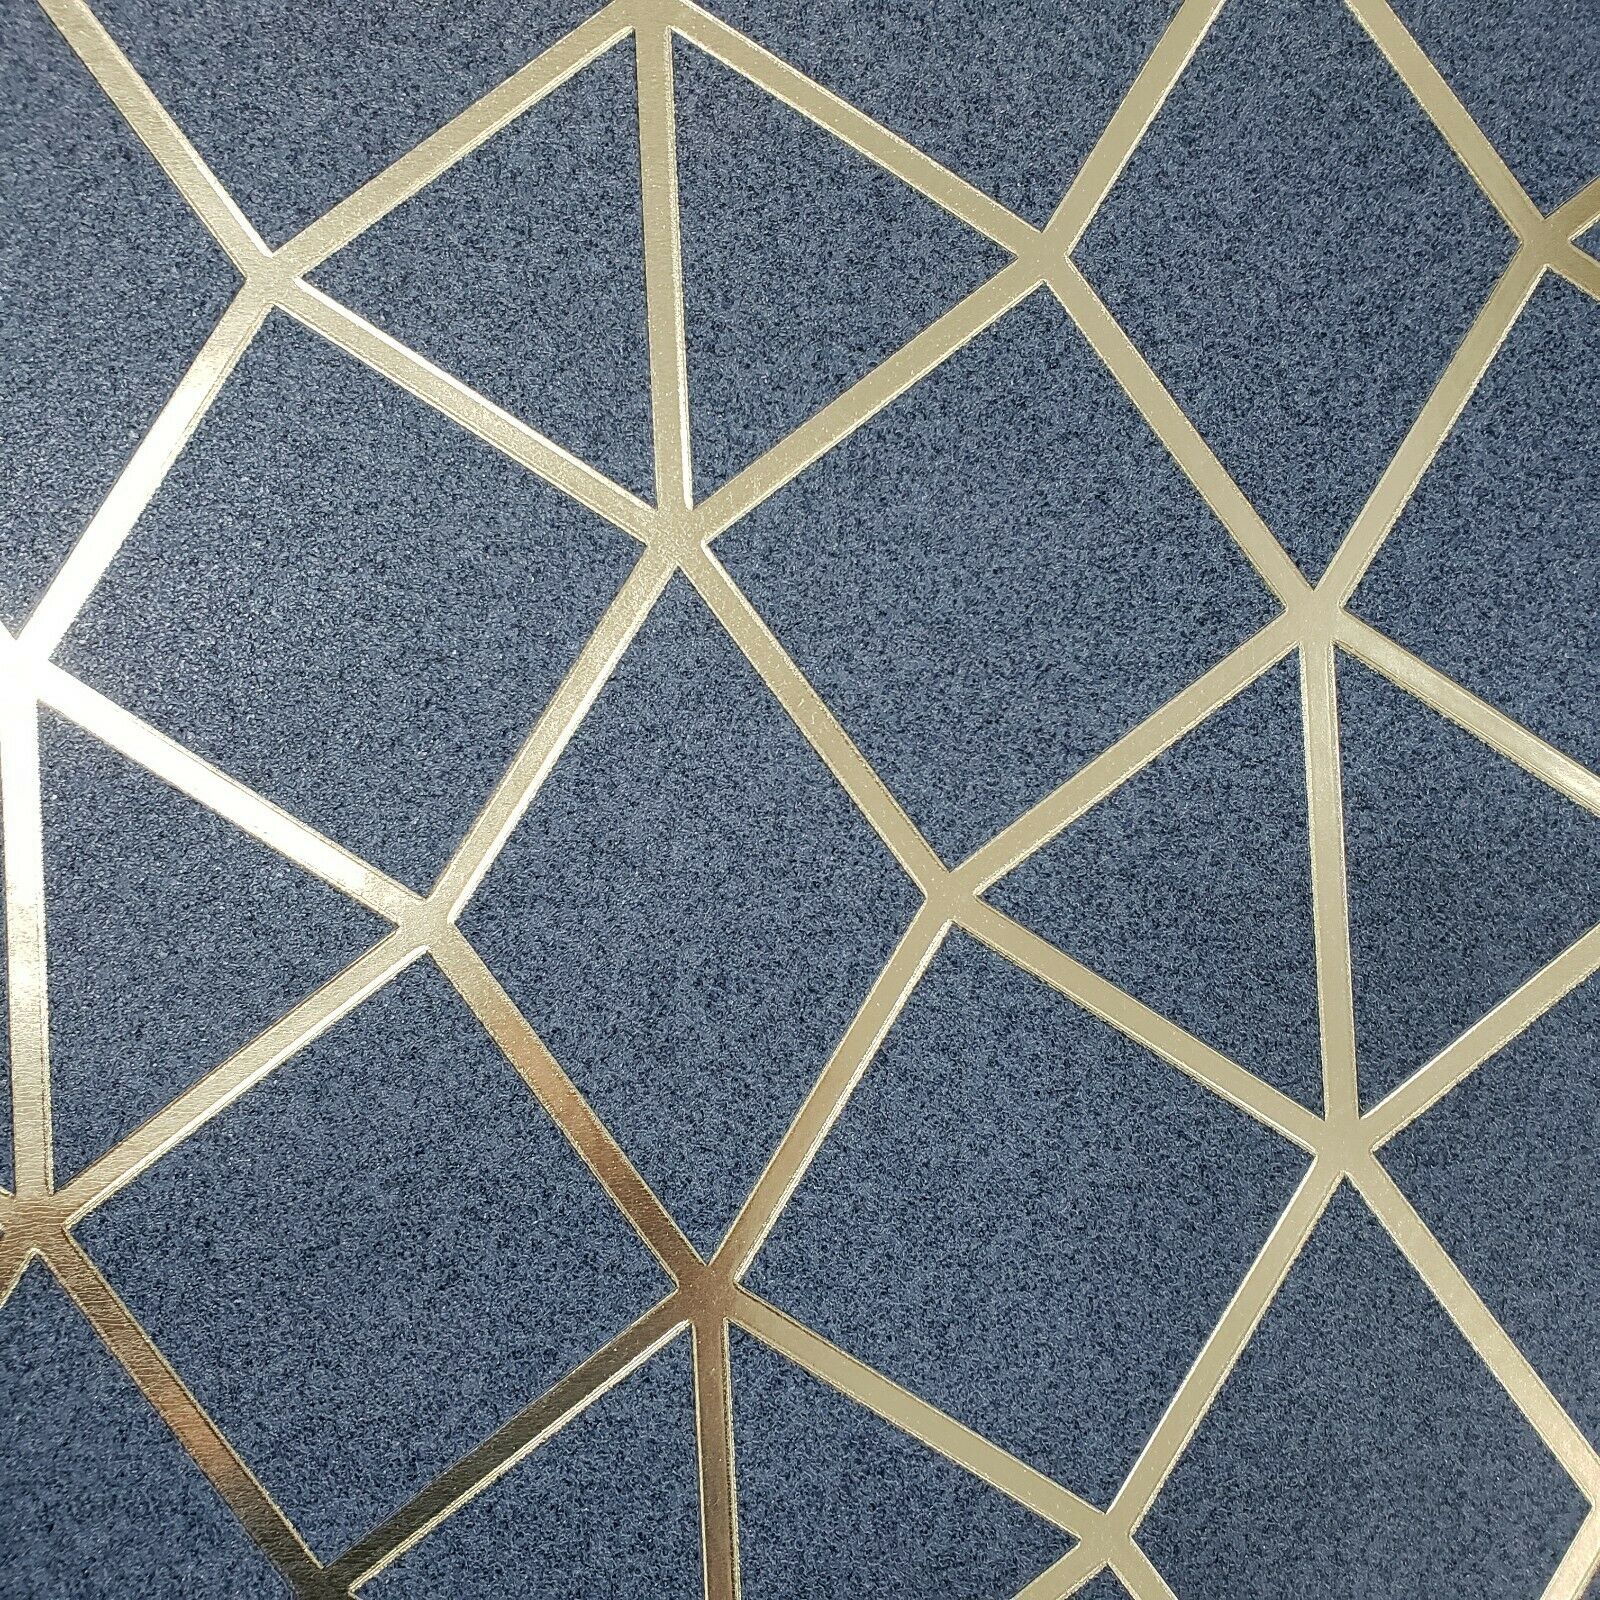 navy blue geometric wallpaper